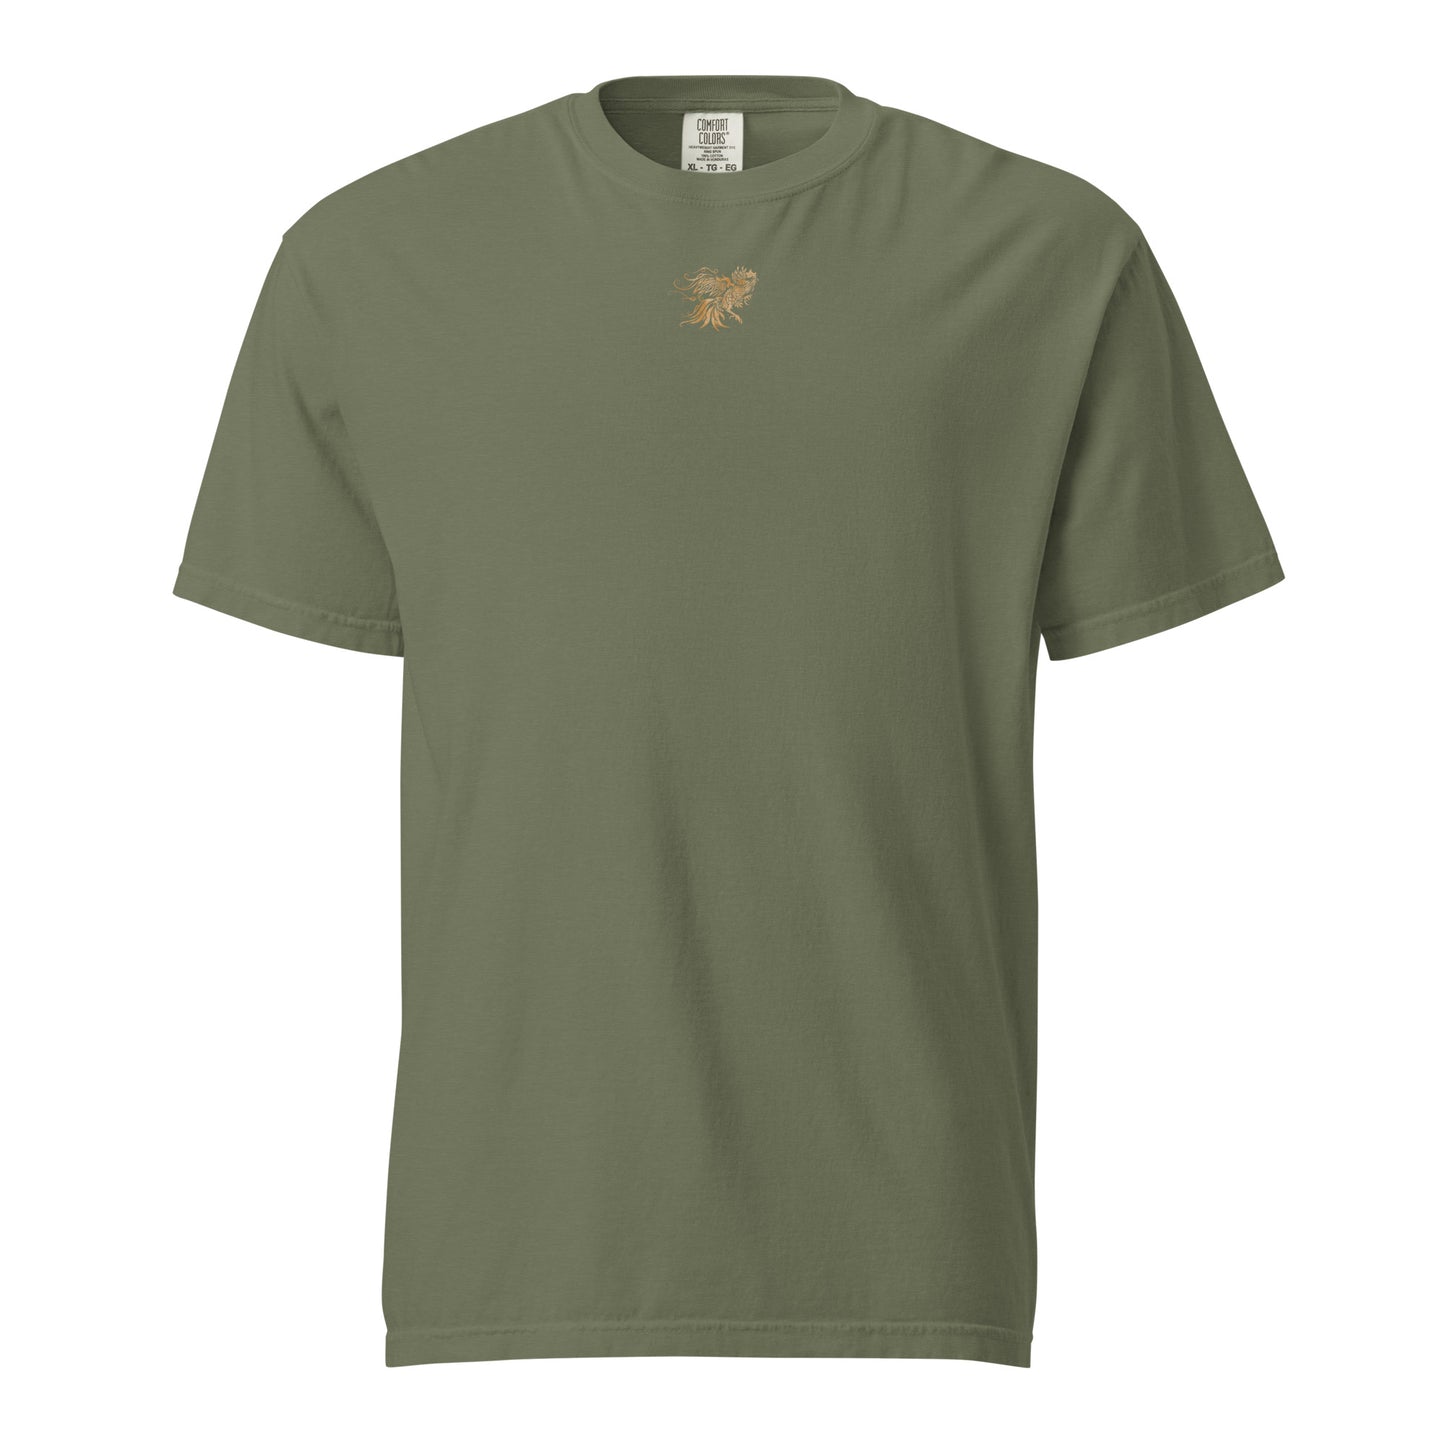 Crooked Spur Farm T-Shirt